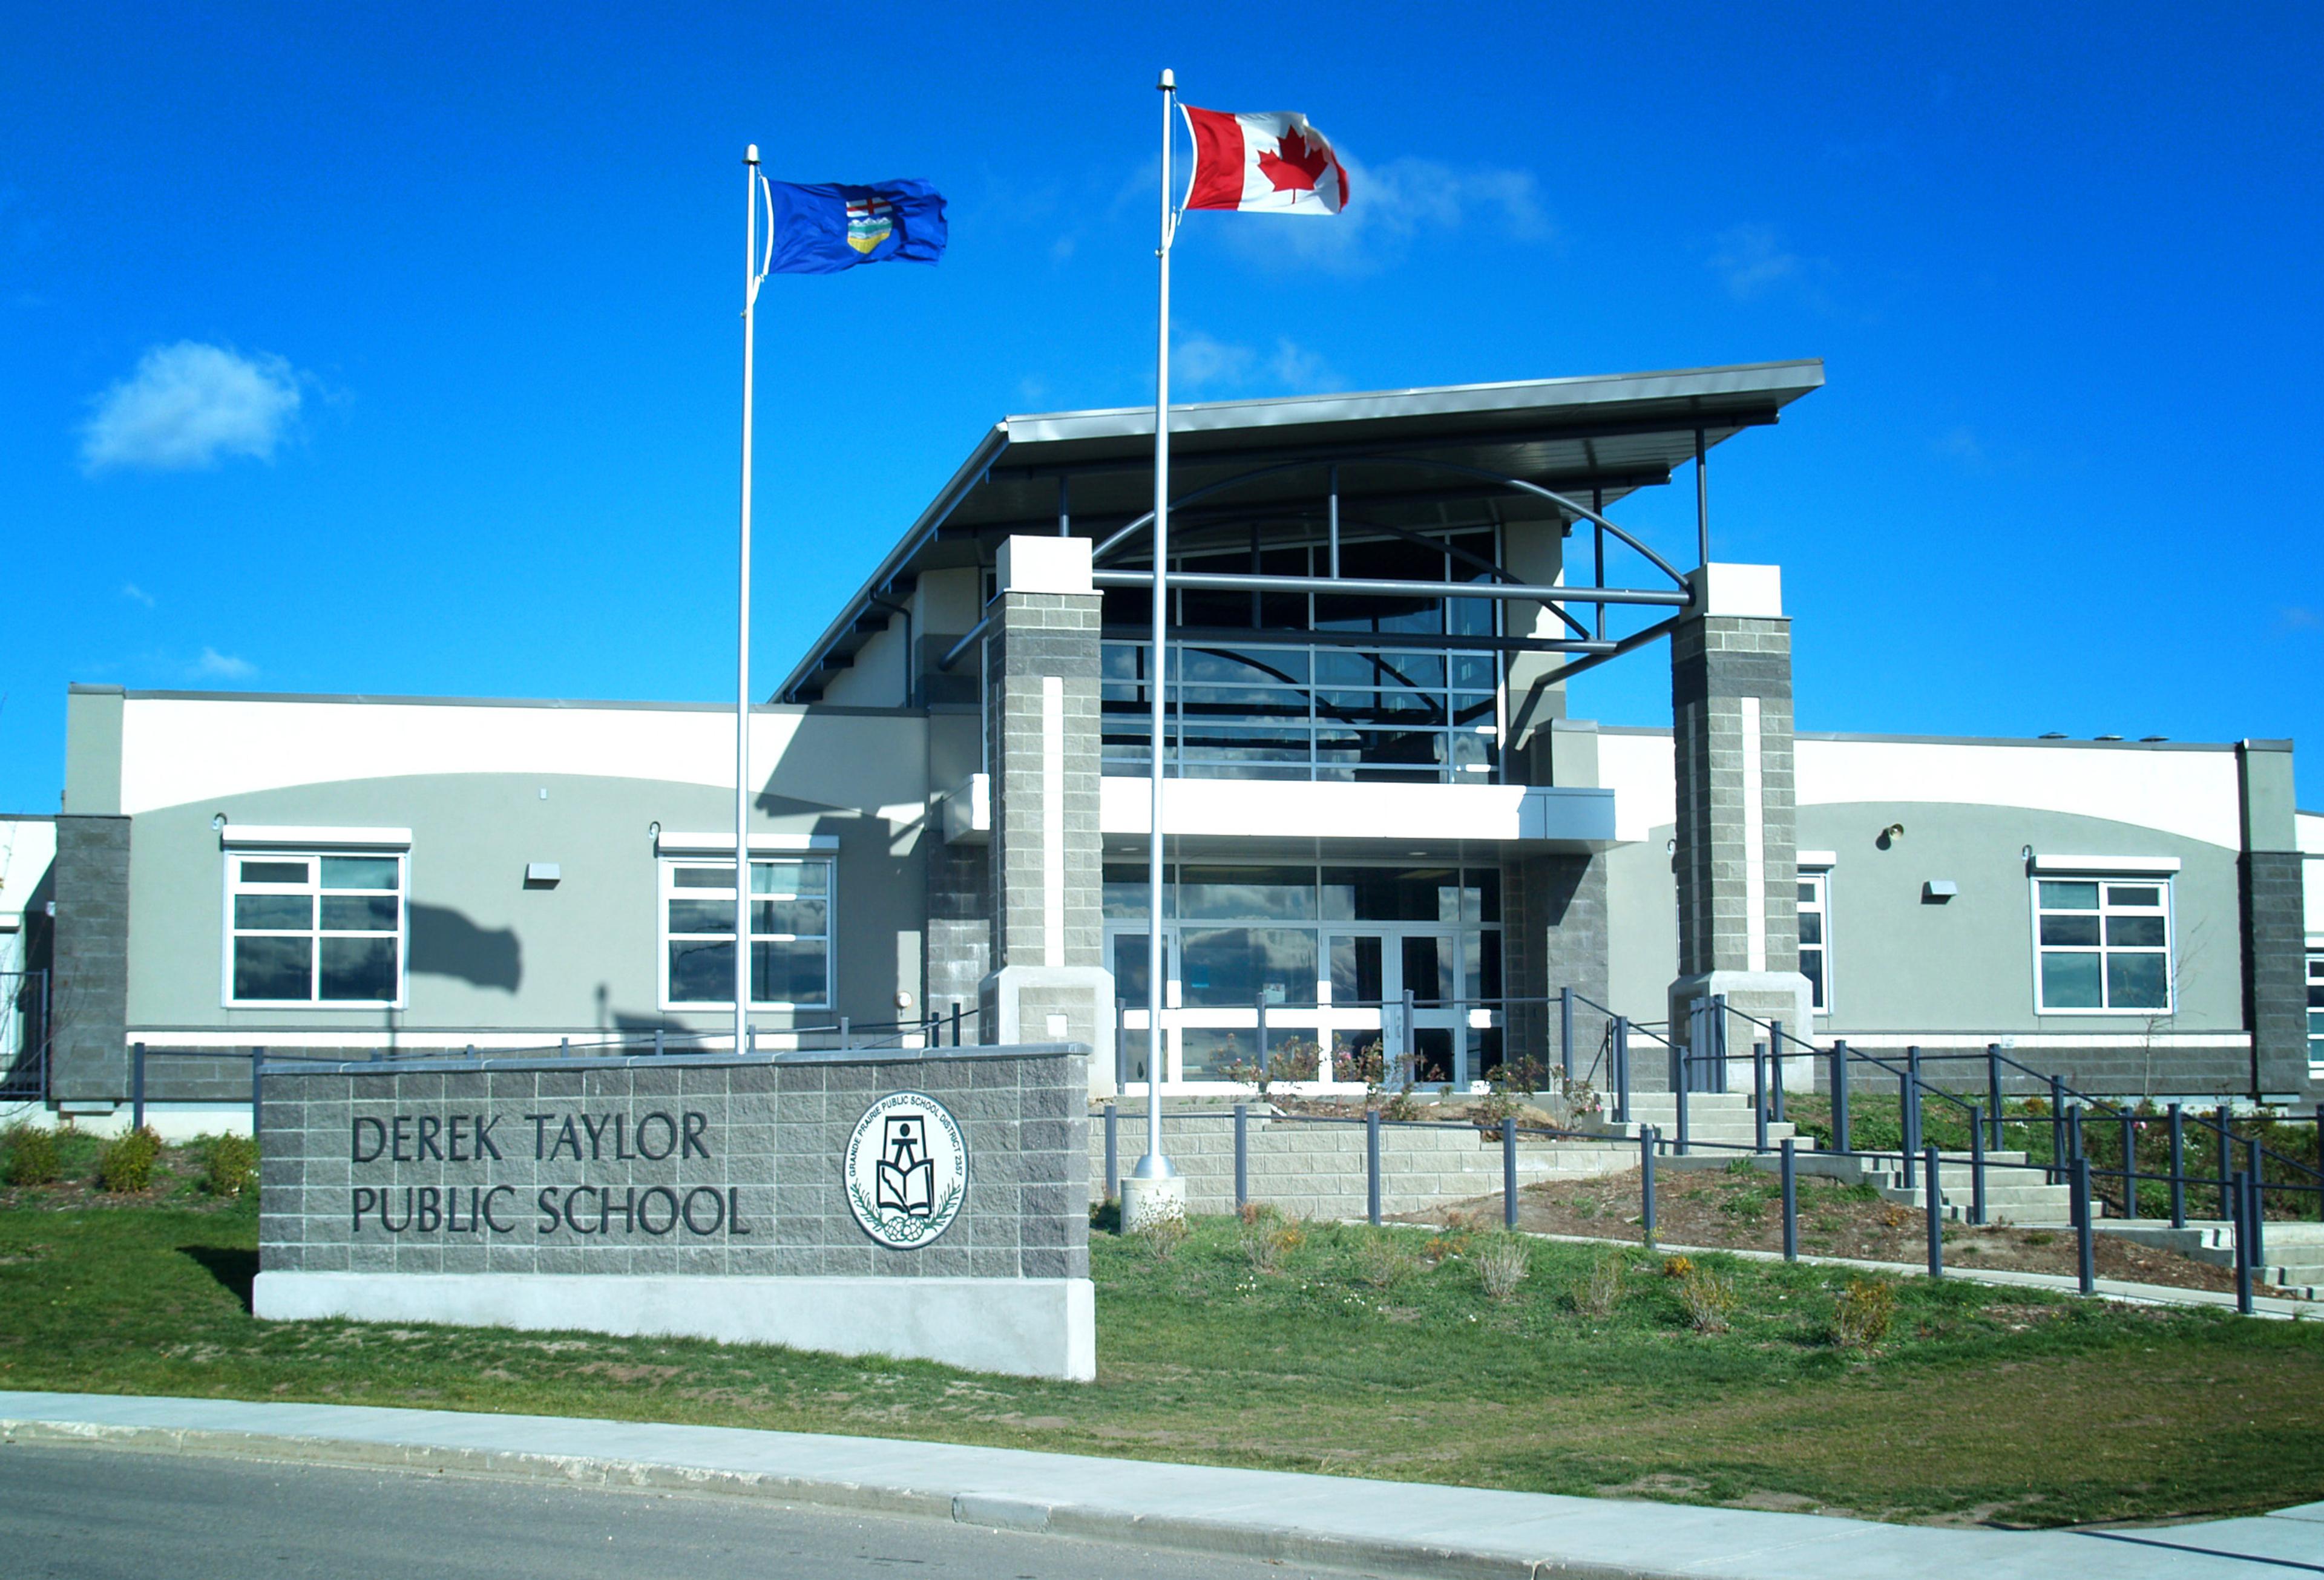 Derek Taylor Public School